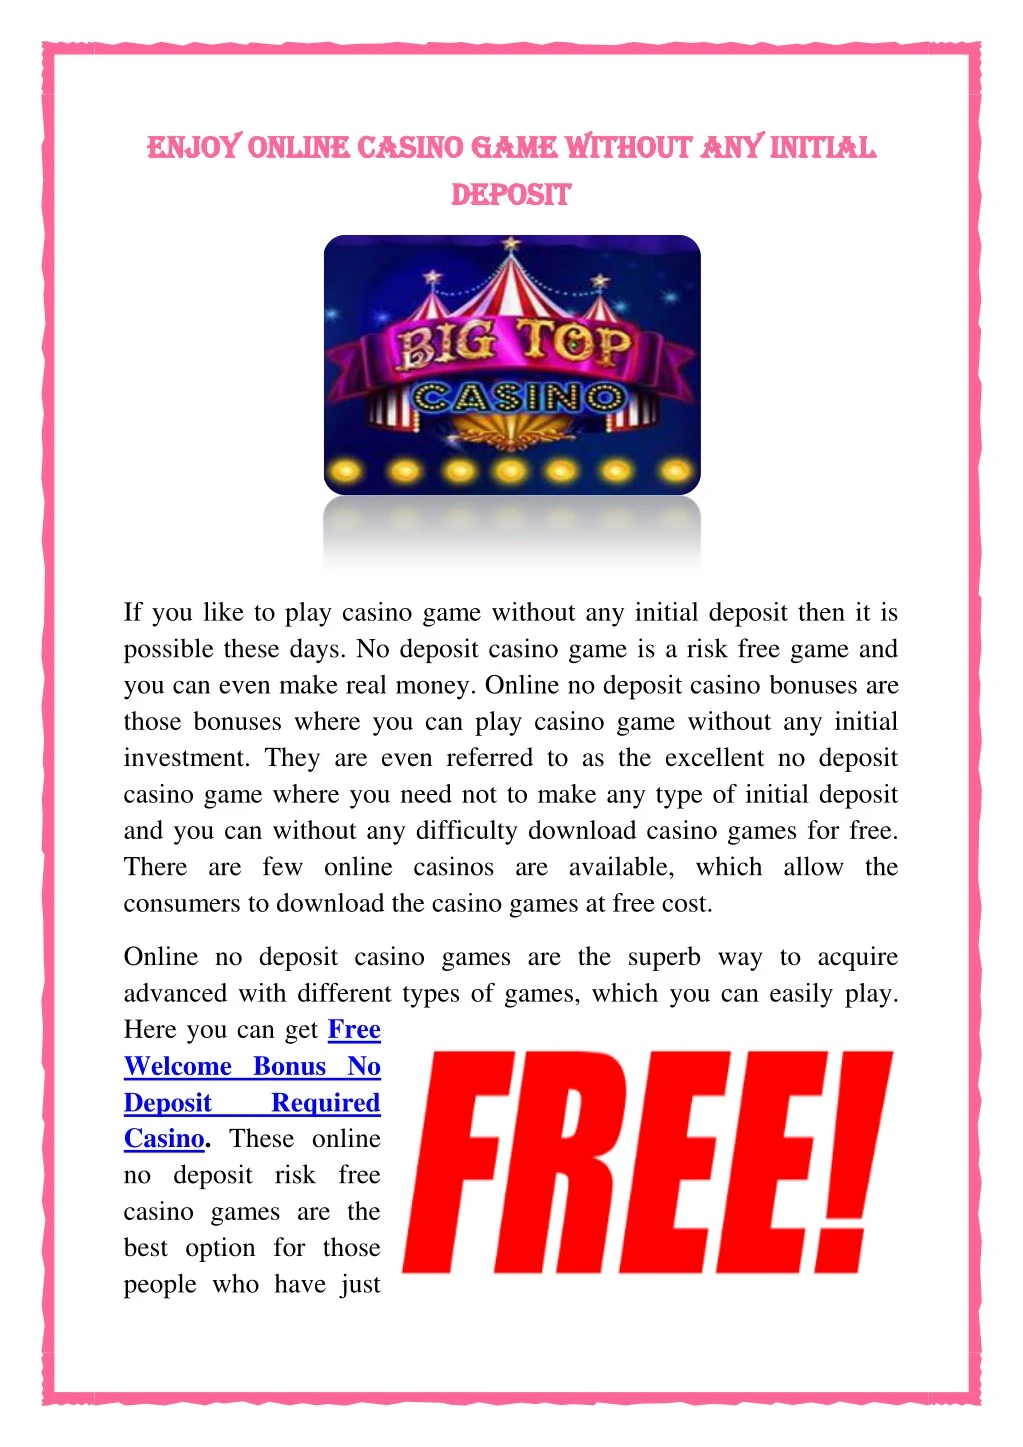 en enjoy joy online online casino